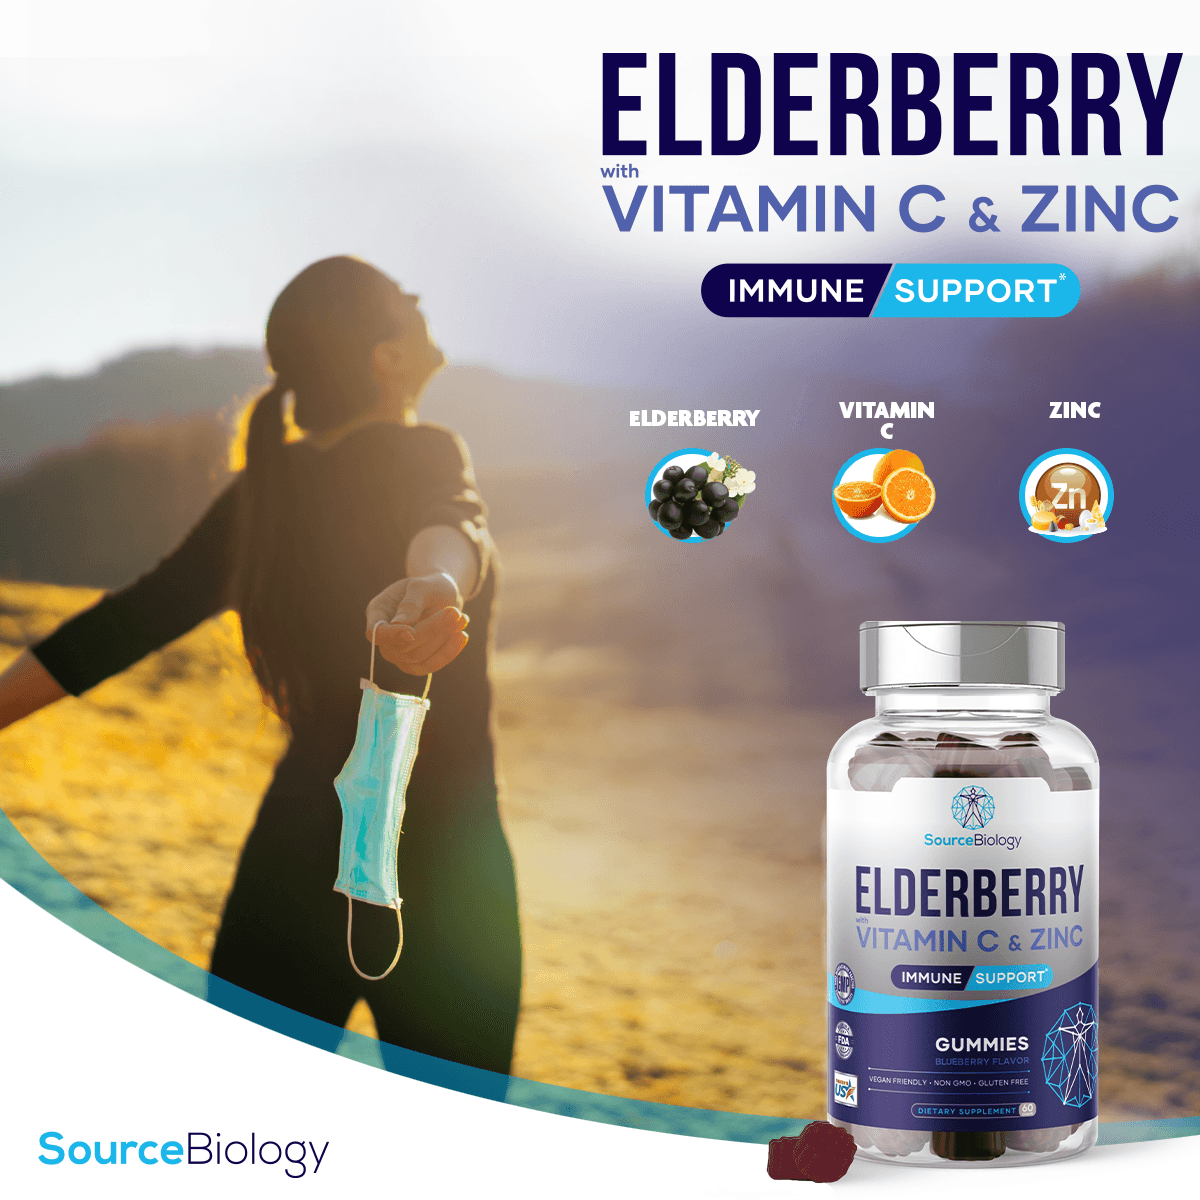 Elderberry Immune Support with Vitamin C and Zinc - Gummies - Source Biology